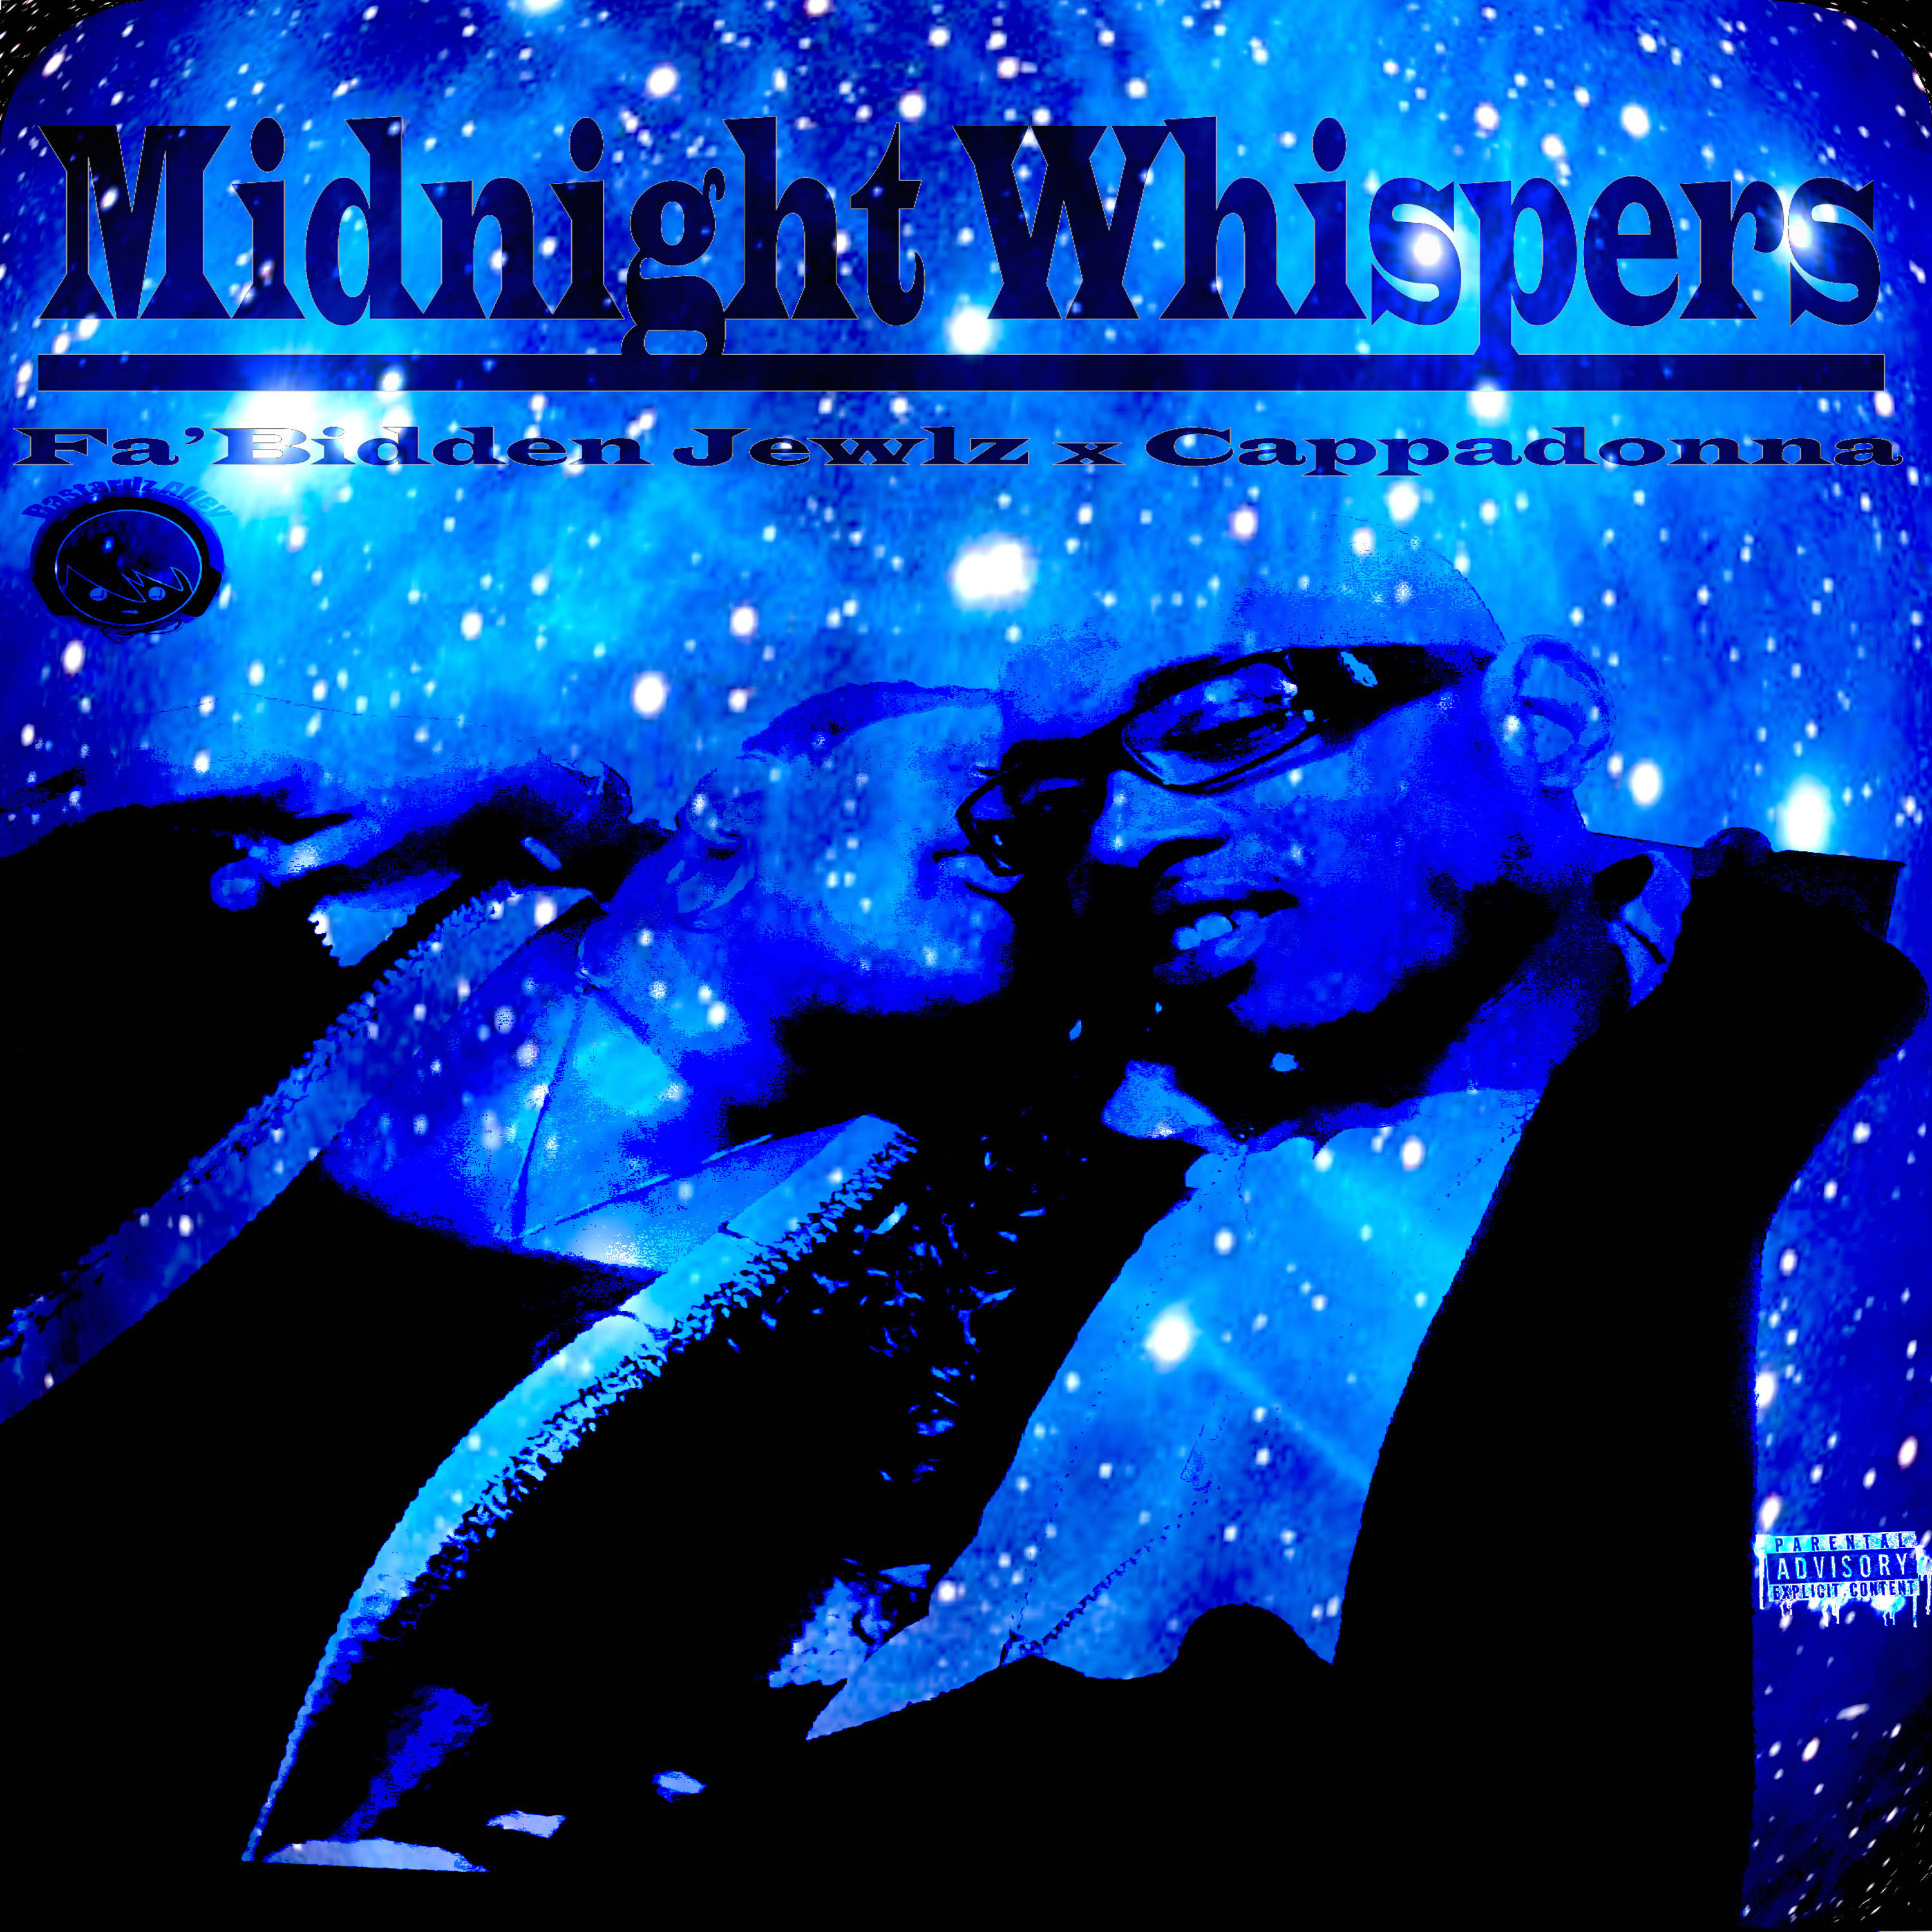 Art for Midnight Whispers by Fa'Bidden Jewlz ft Cappadonna